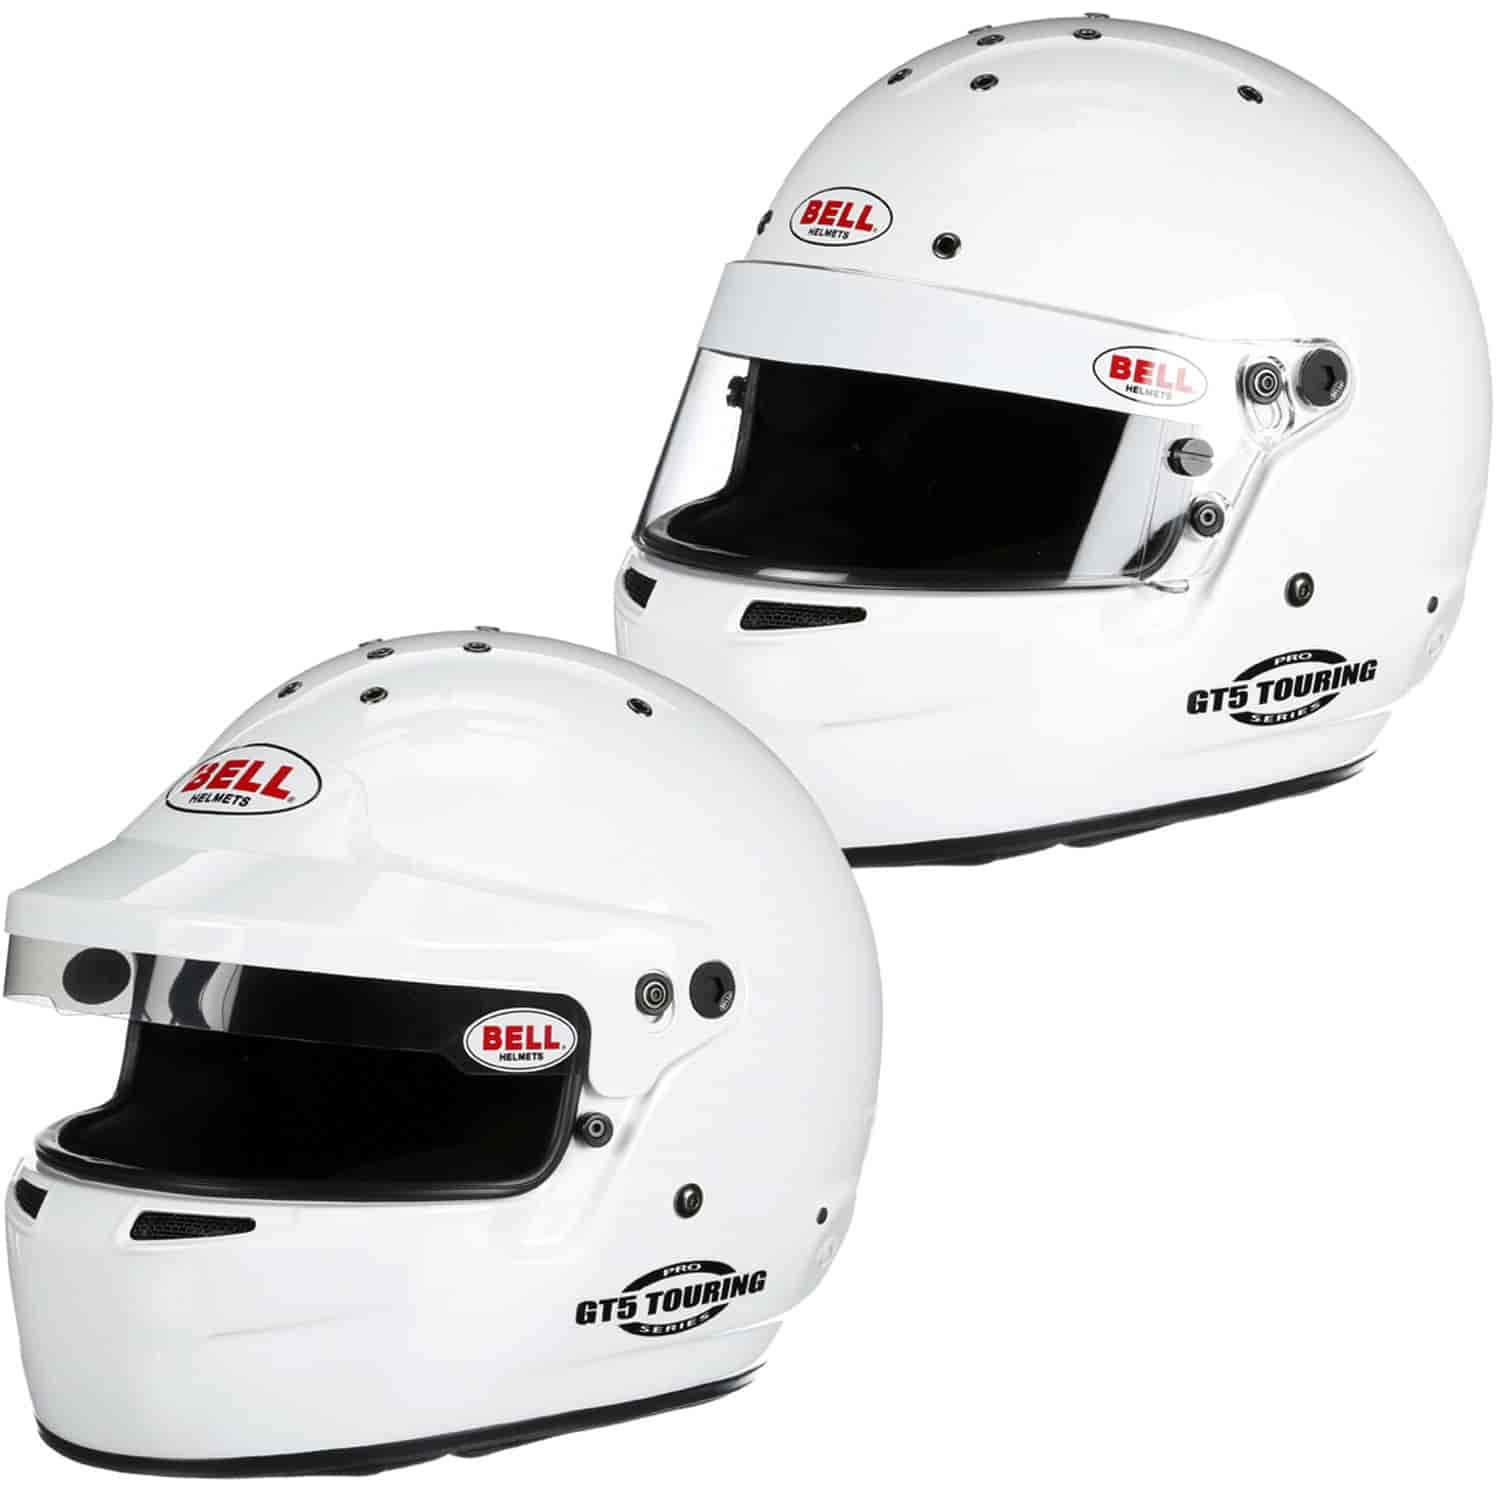 GT5 Touring Helmet SA2015 Certified